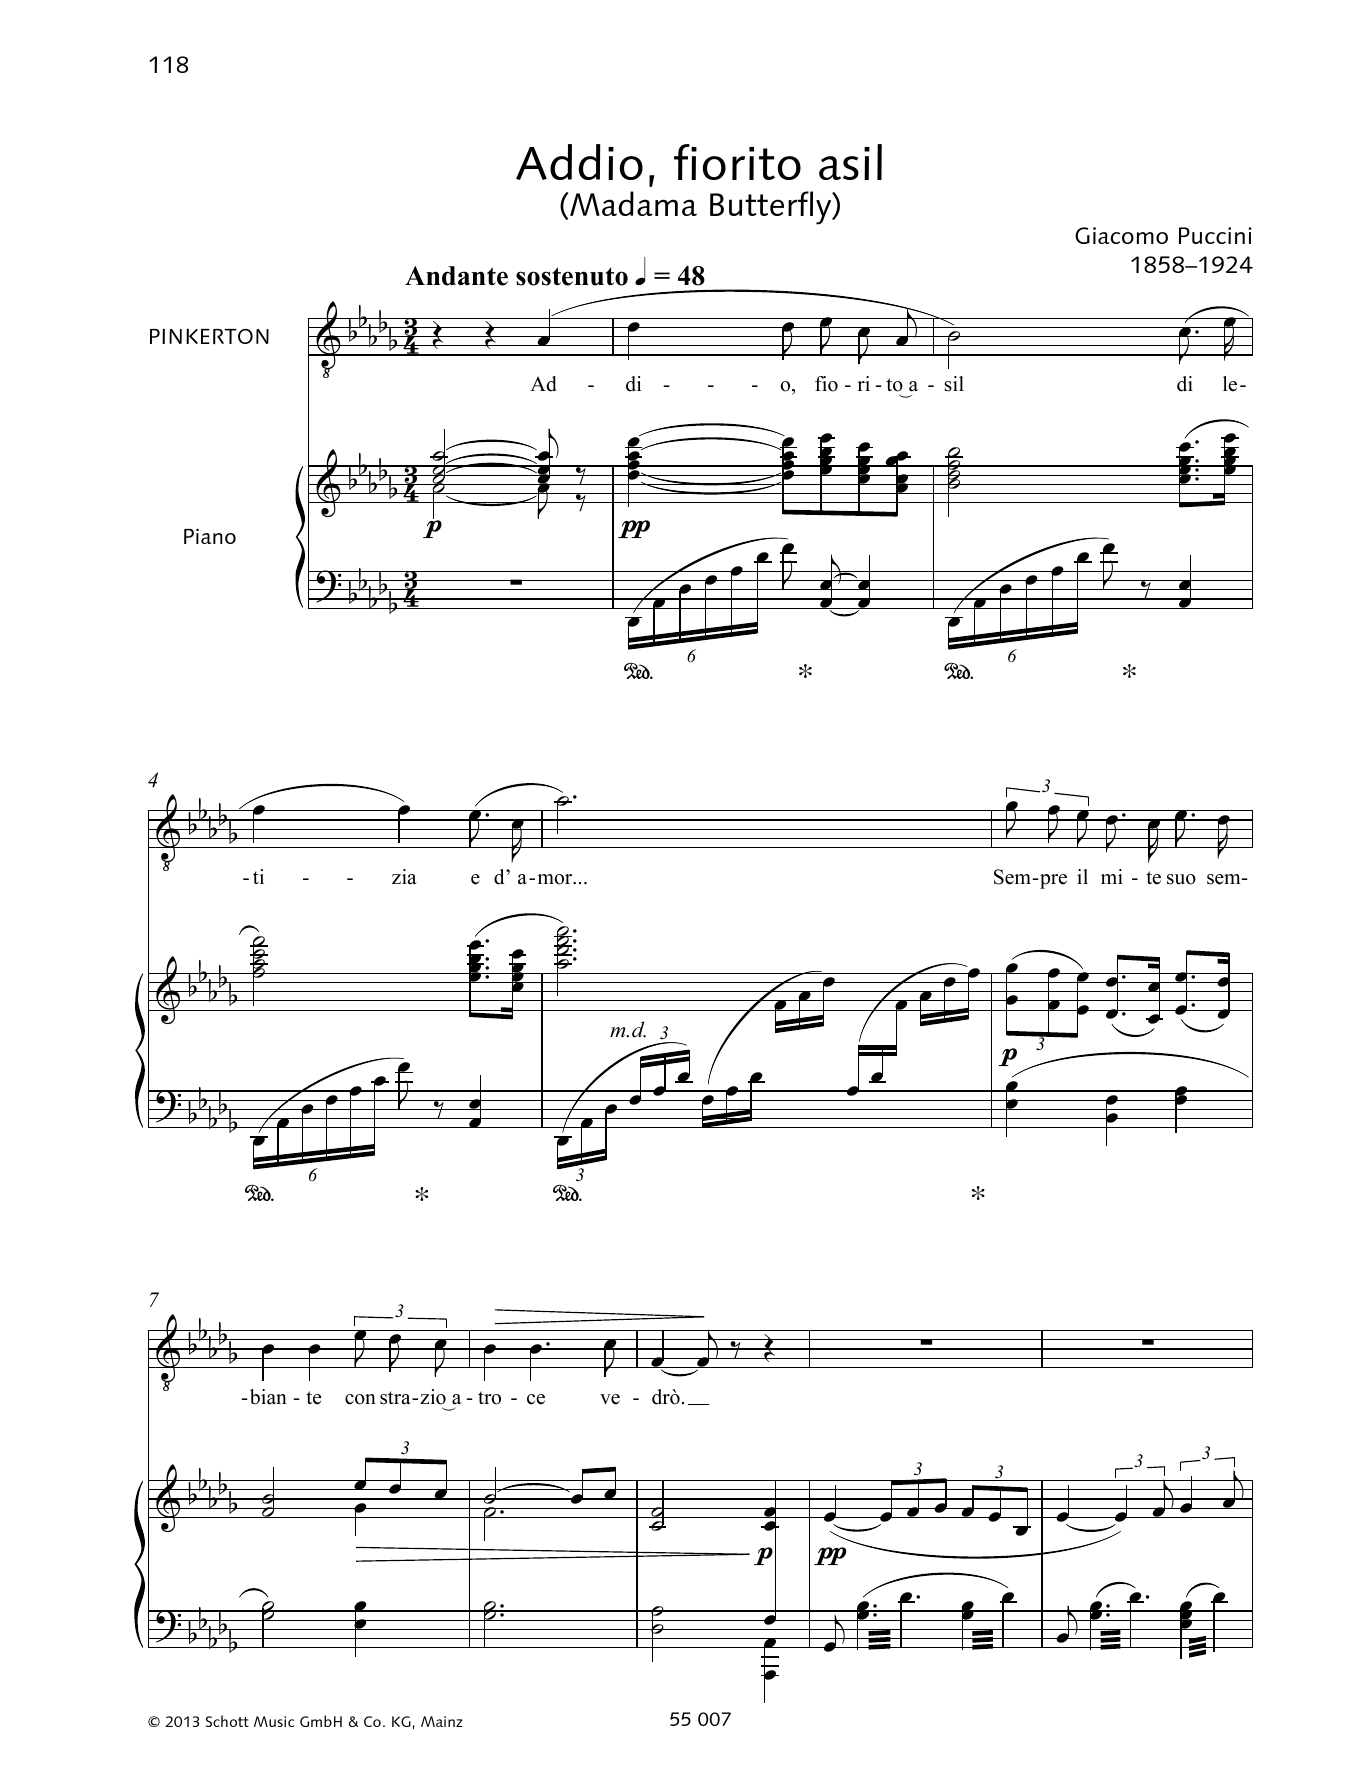 Giacomo Puccini Addio, Fiorito Asil Sheet Music Notes & Chords for Piano Solo - Download or Print PDF